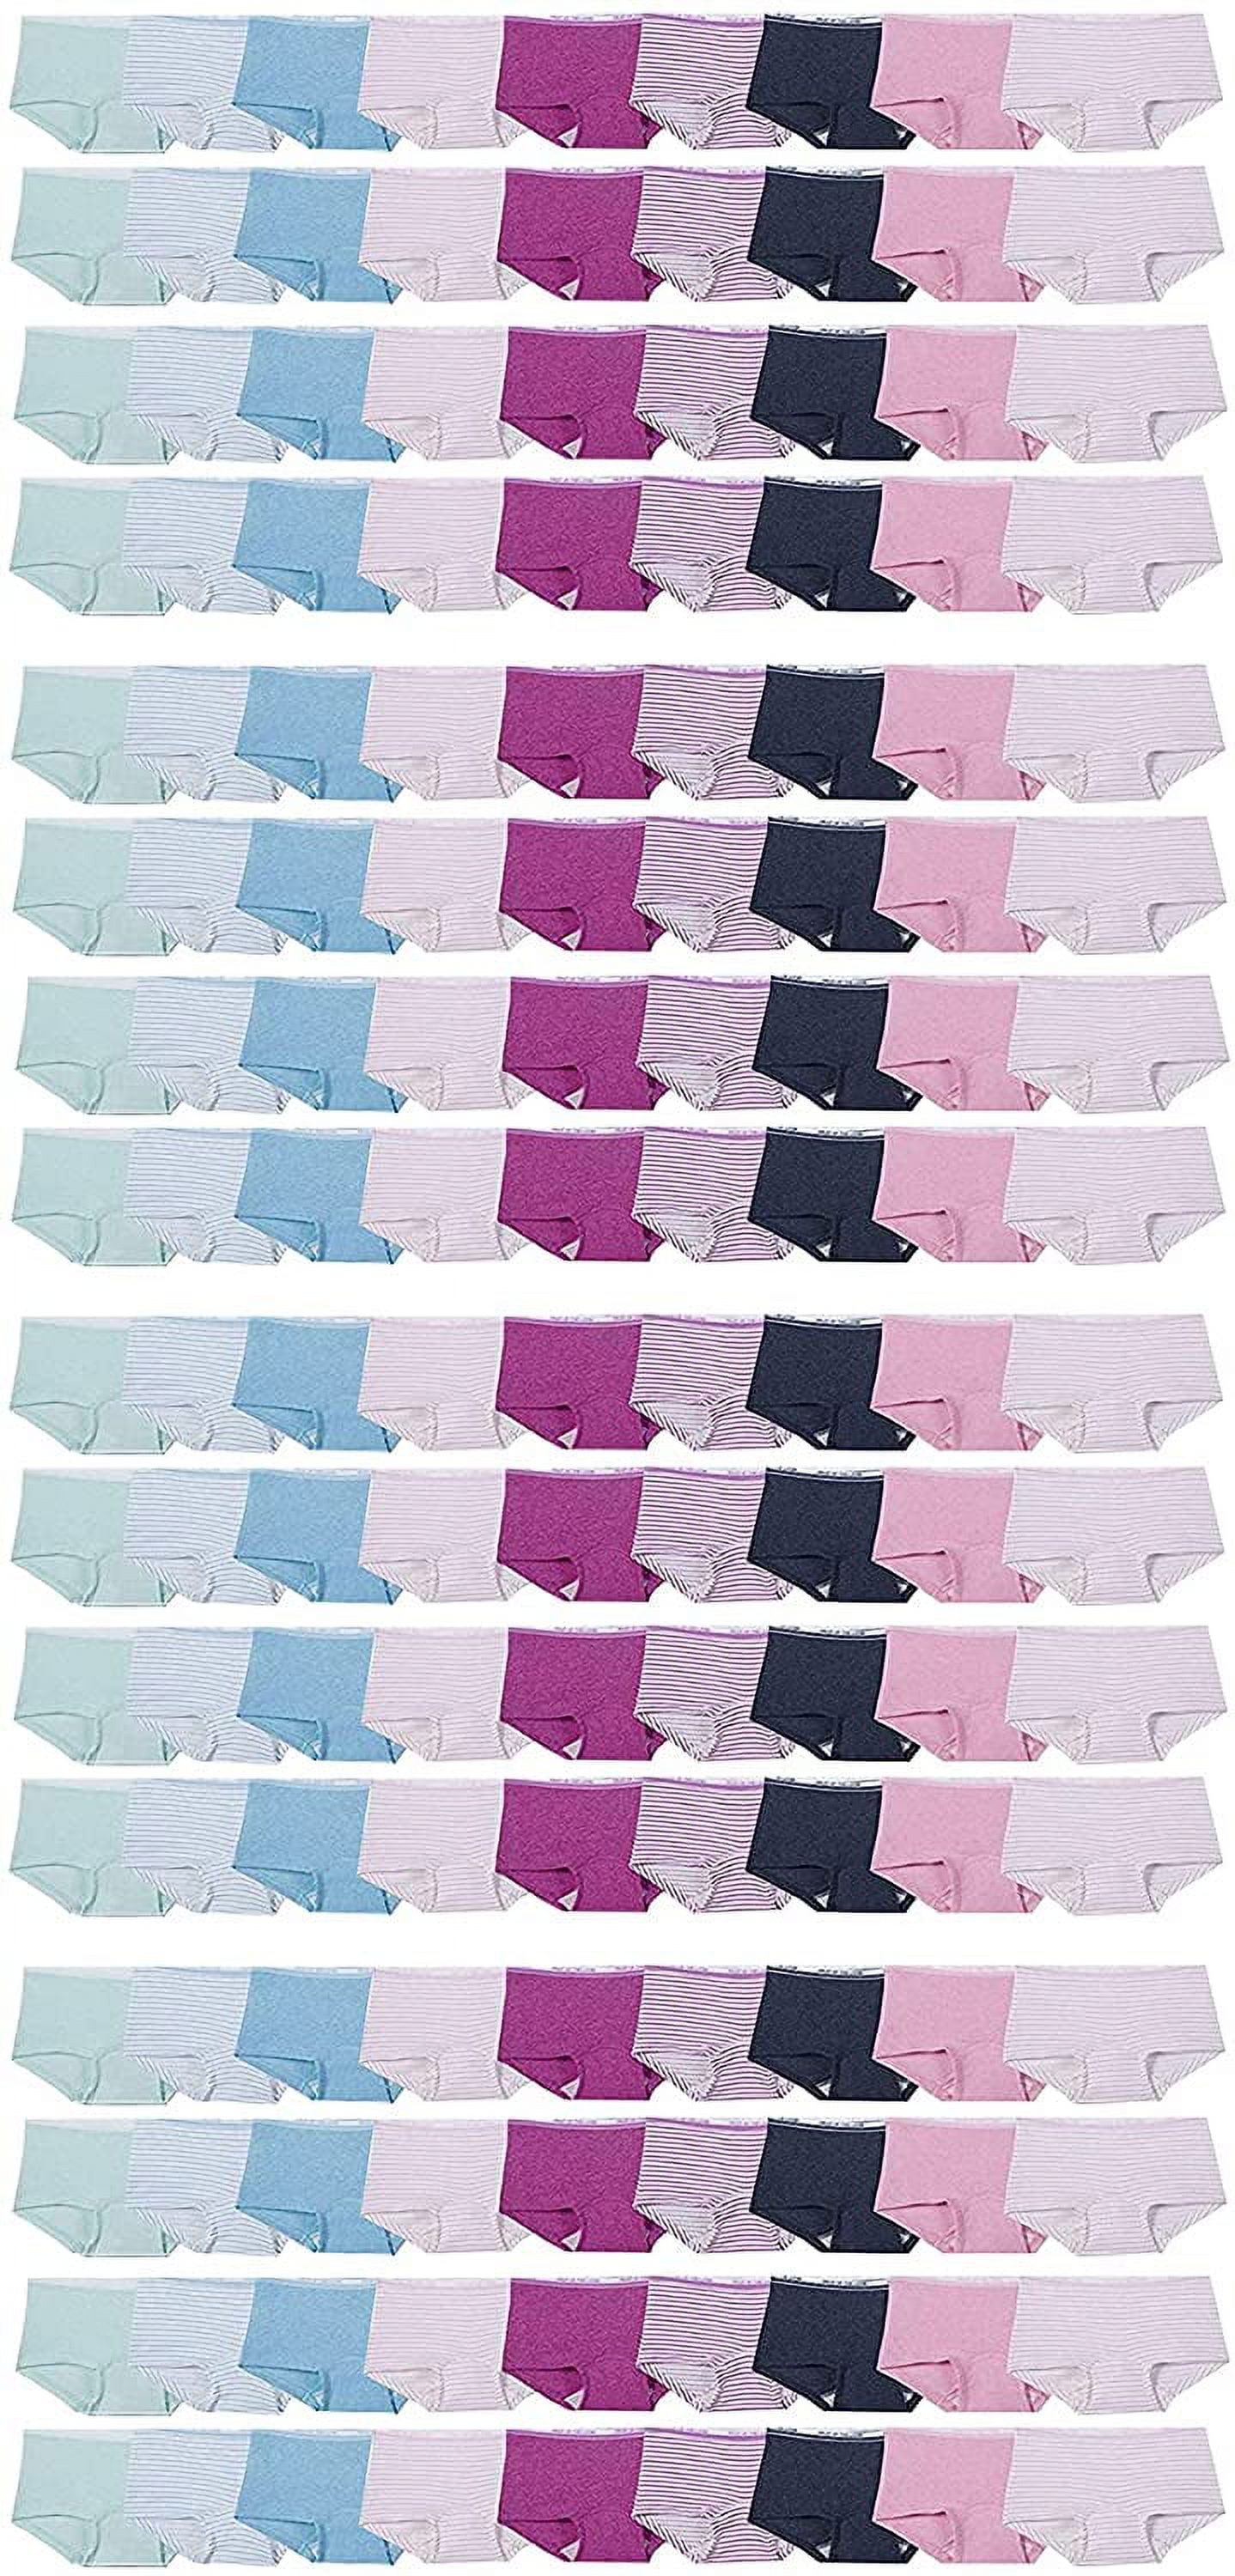 SOCKSN'BULK 72 Pieces of Wholesale Bulk Girls Cotton Colorful Panties  Underwear Children, Mixed Assorted Sizes 4-14